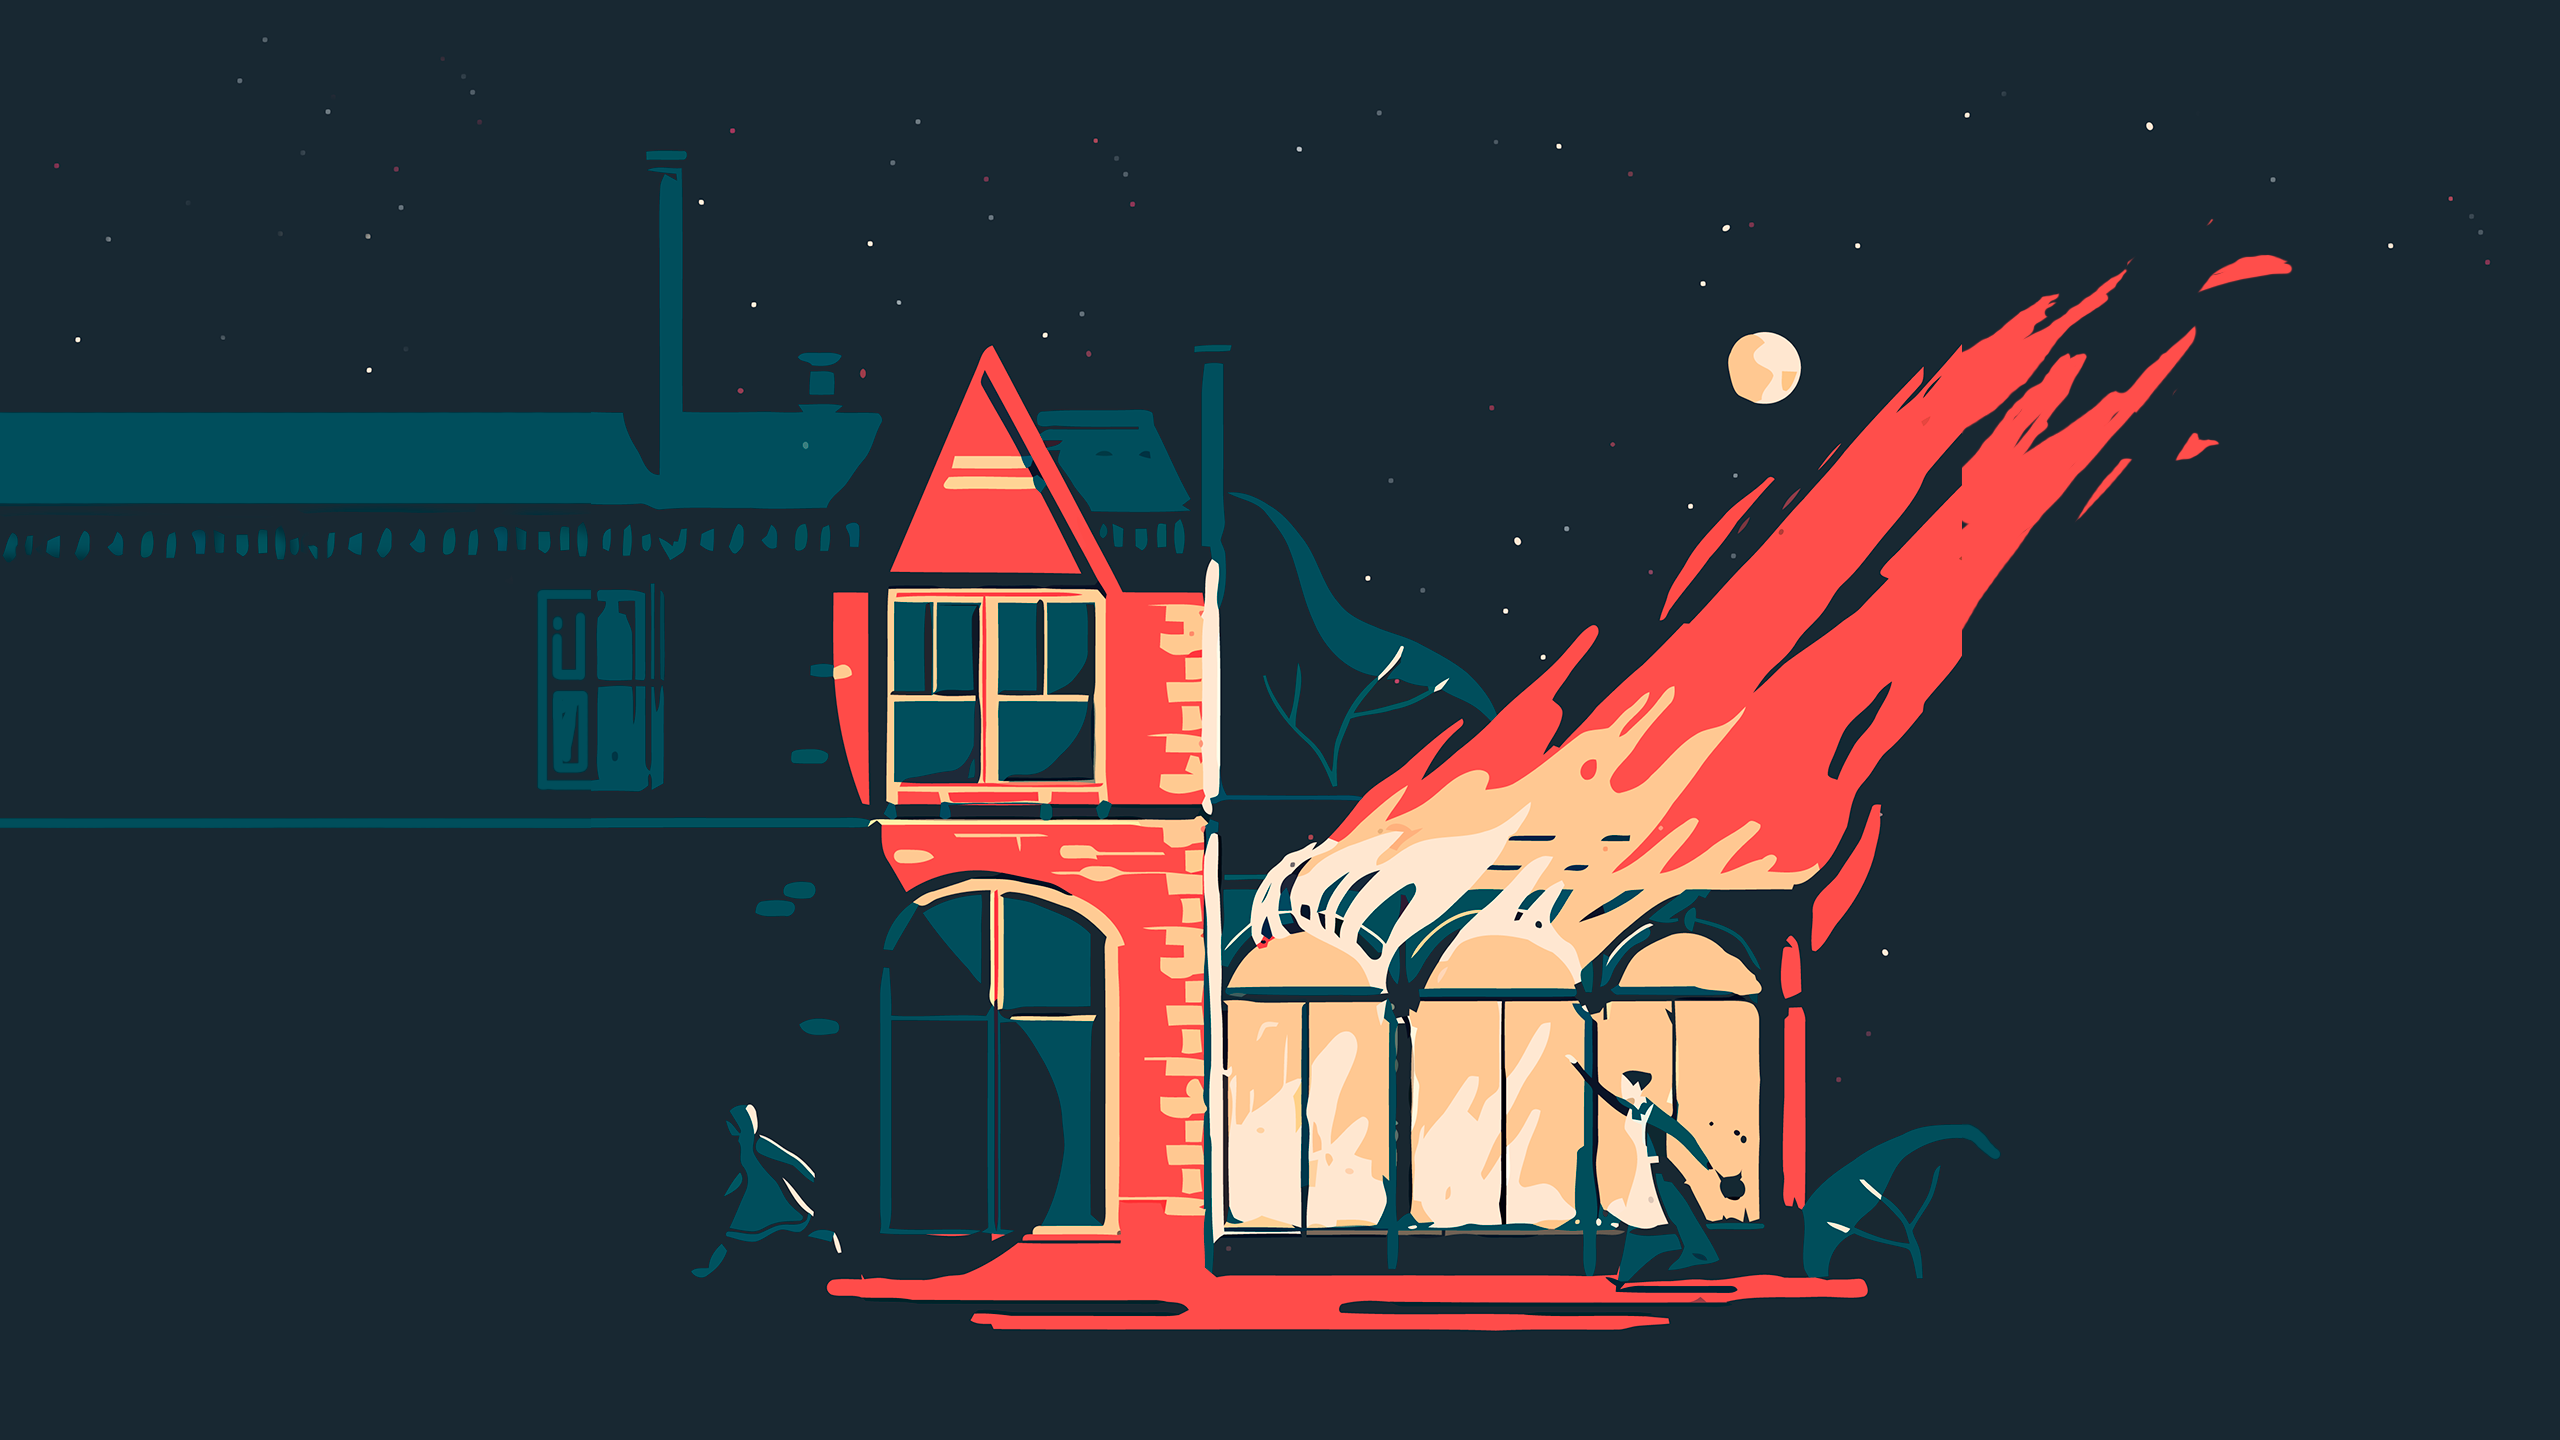 General 2560x1440 fire burning night house illustration Tom Haugomat artwork burning house digital art minimalism